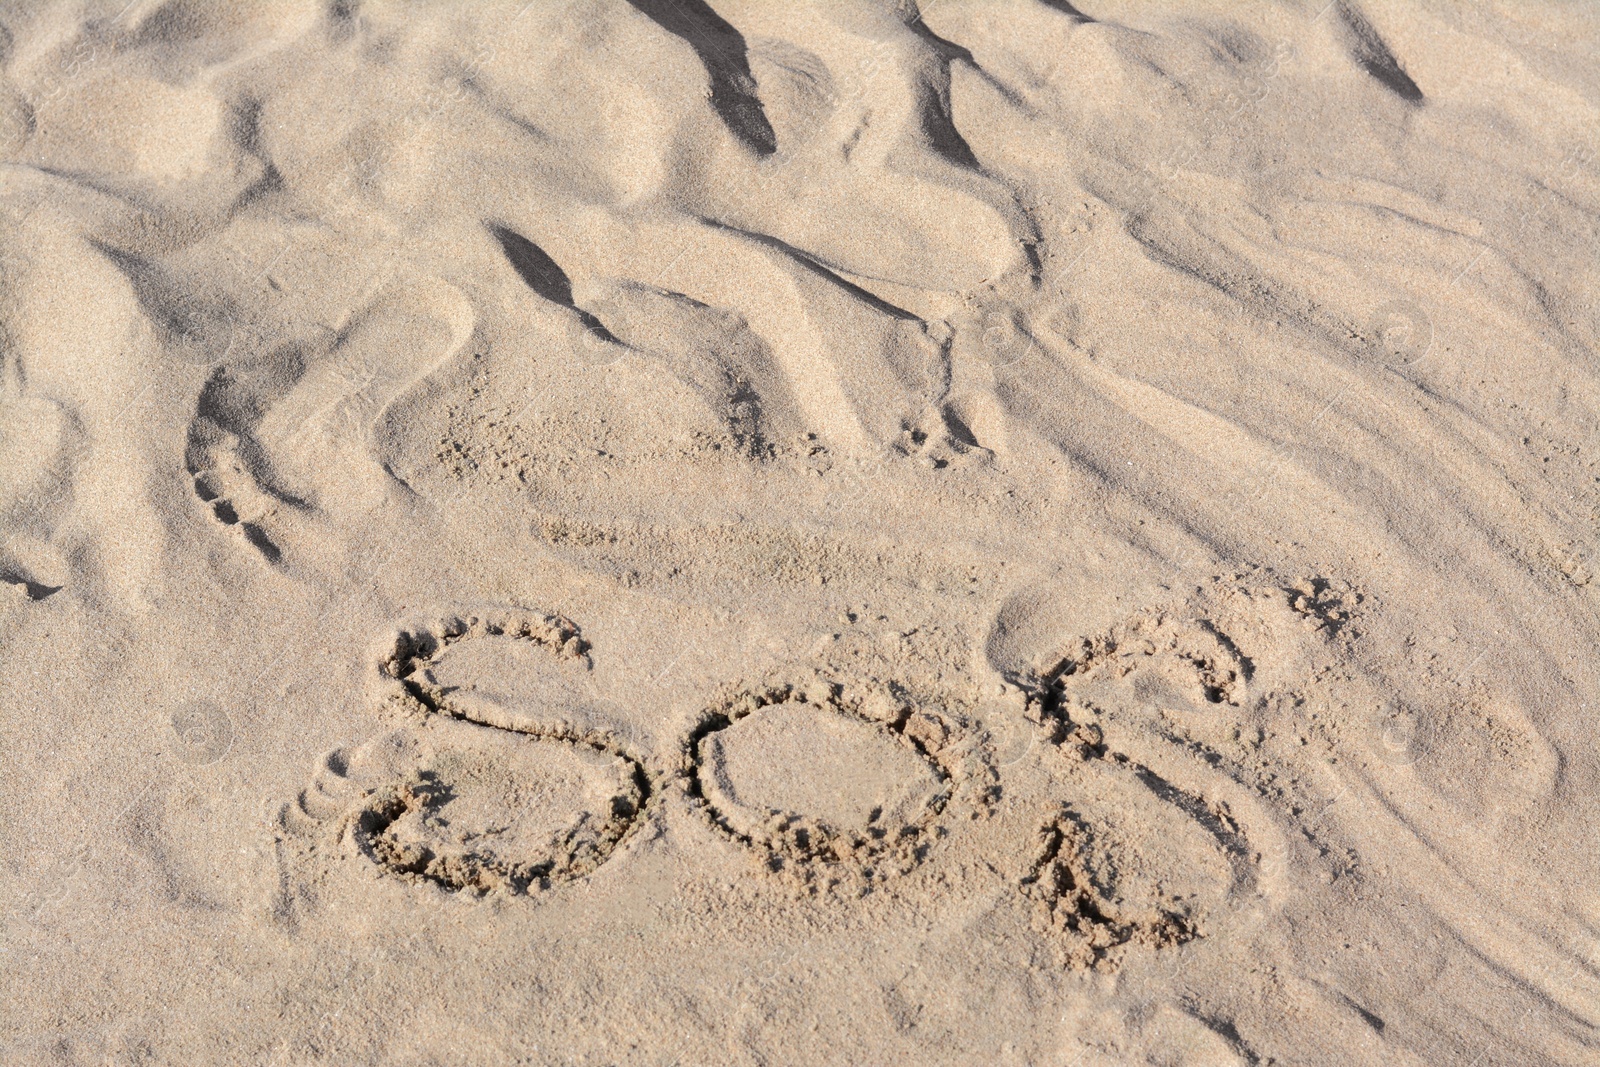 Photo of SOS message written on sandy beach outdoors